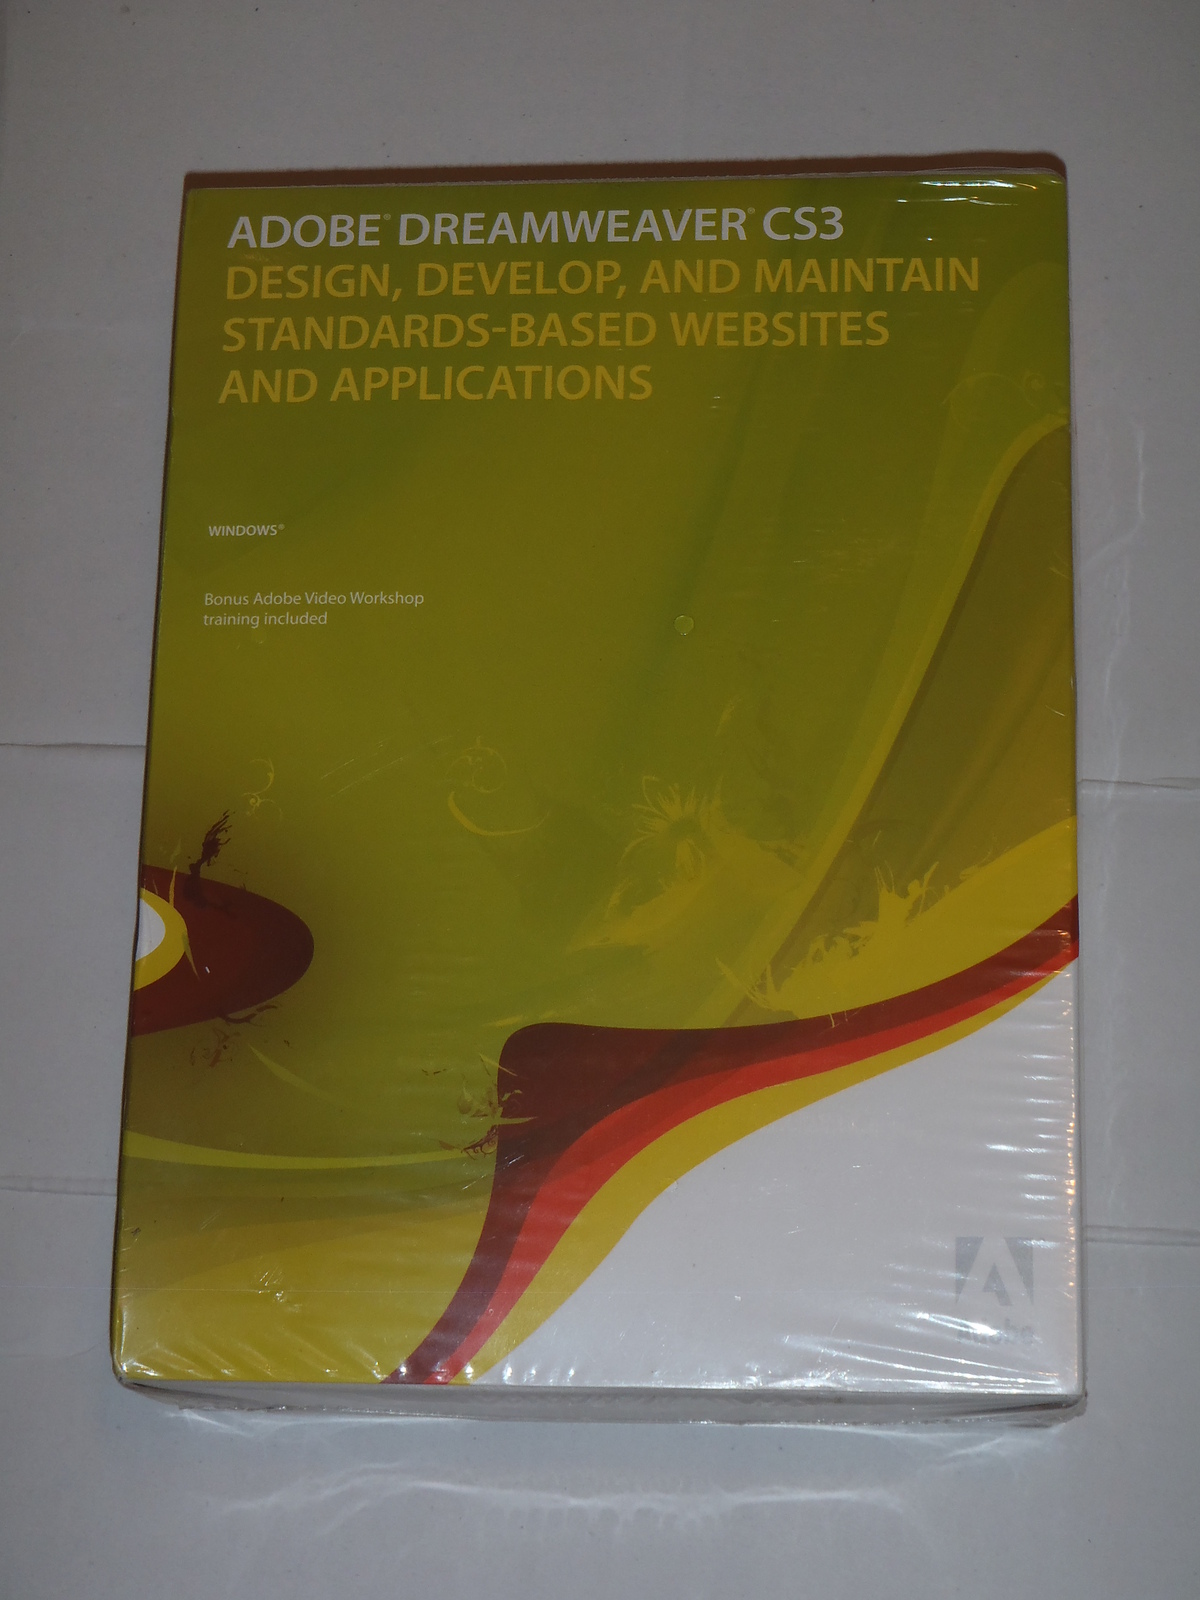 dreamweaver cs3 free download full version for windows xp